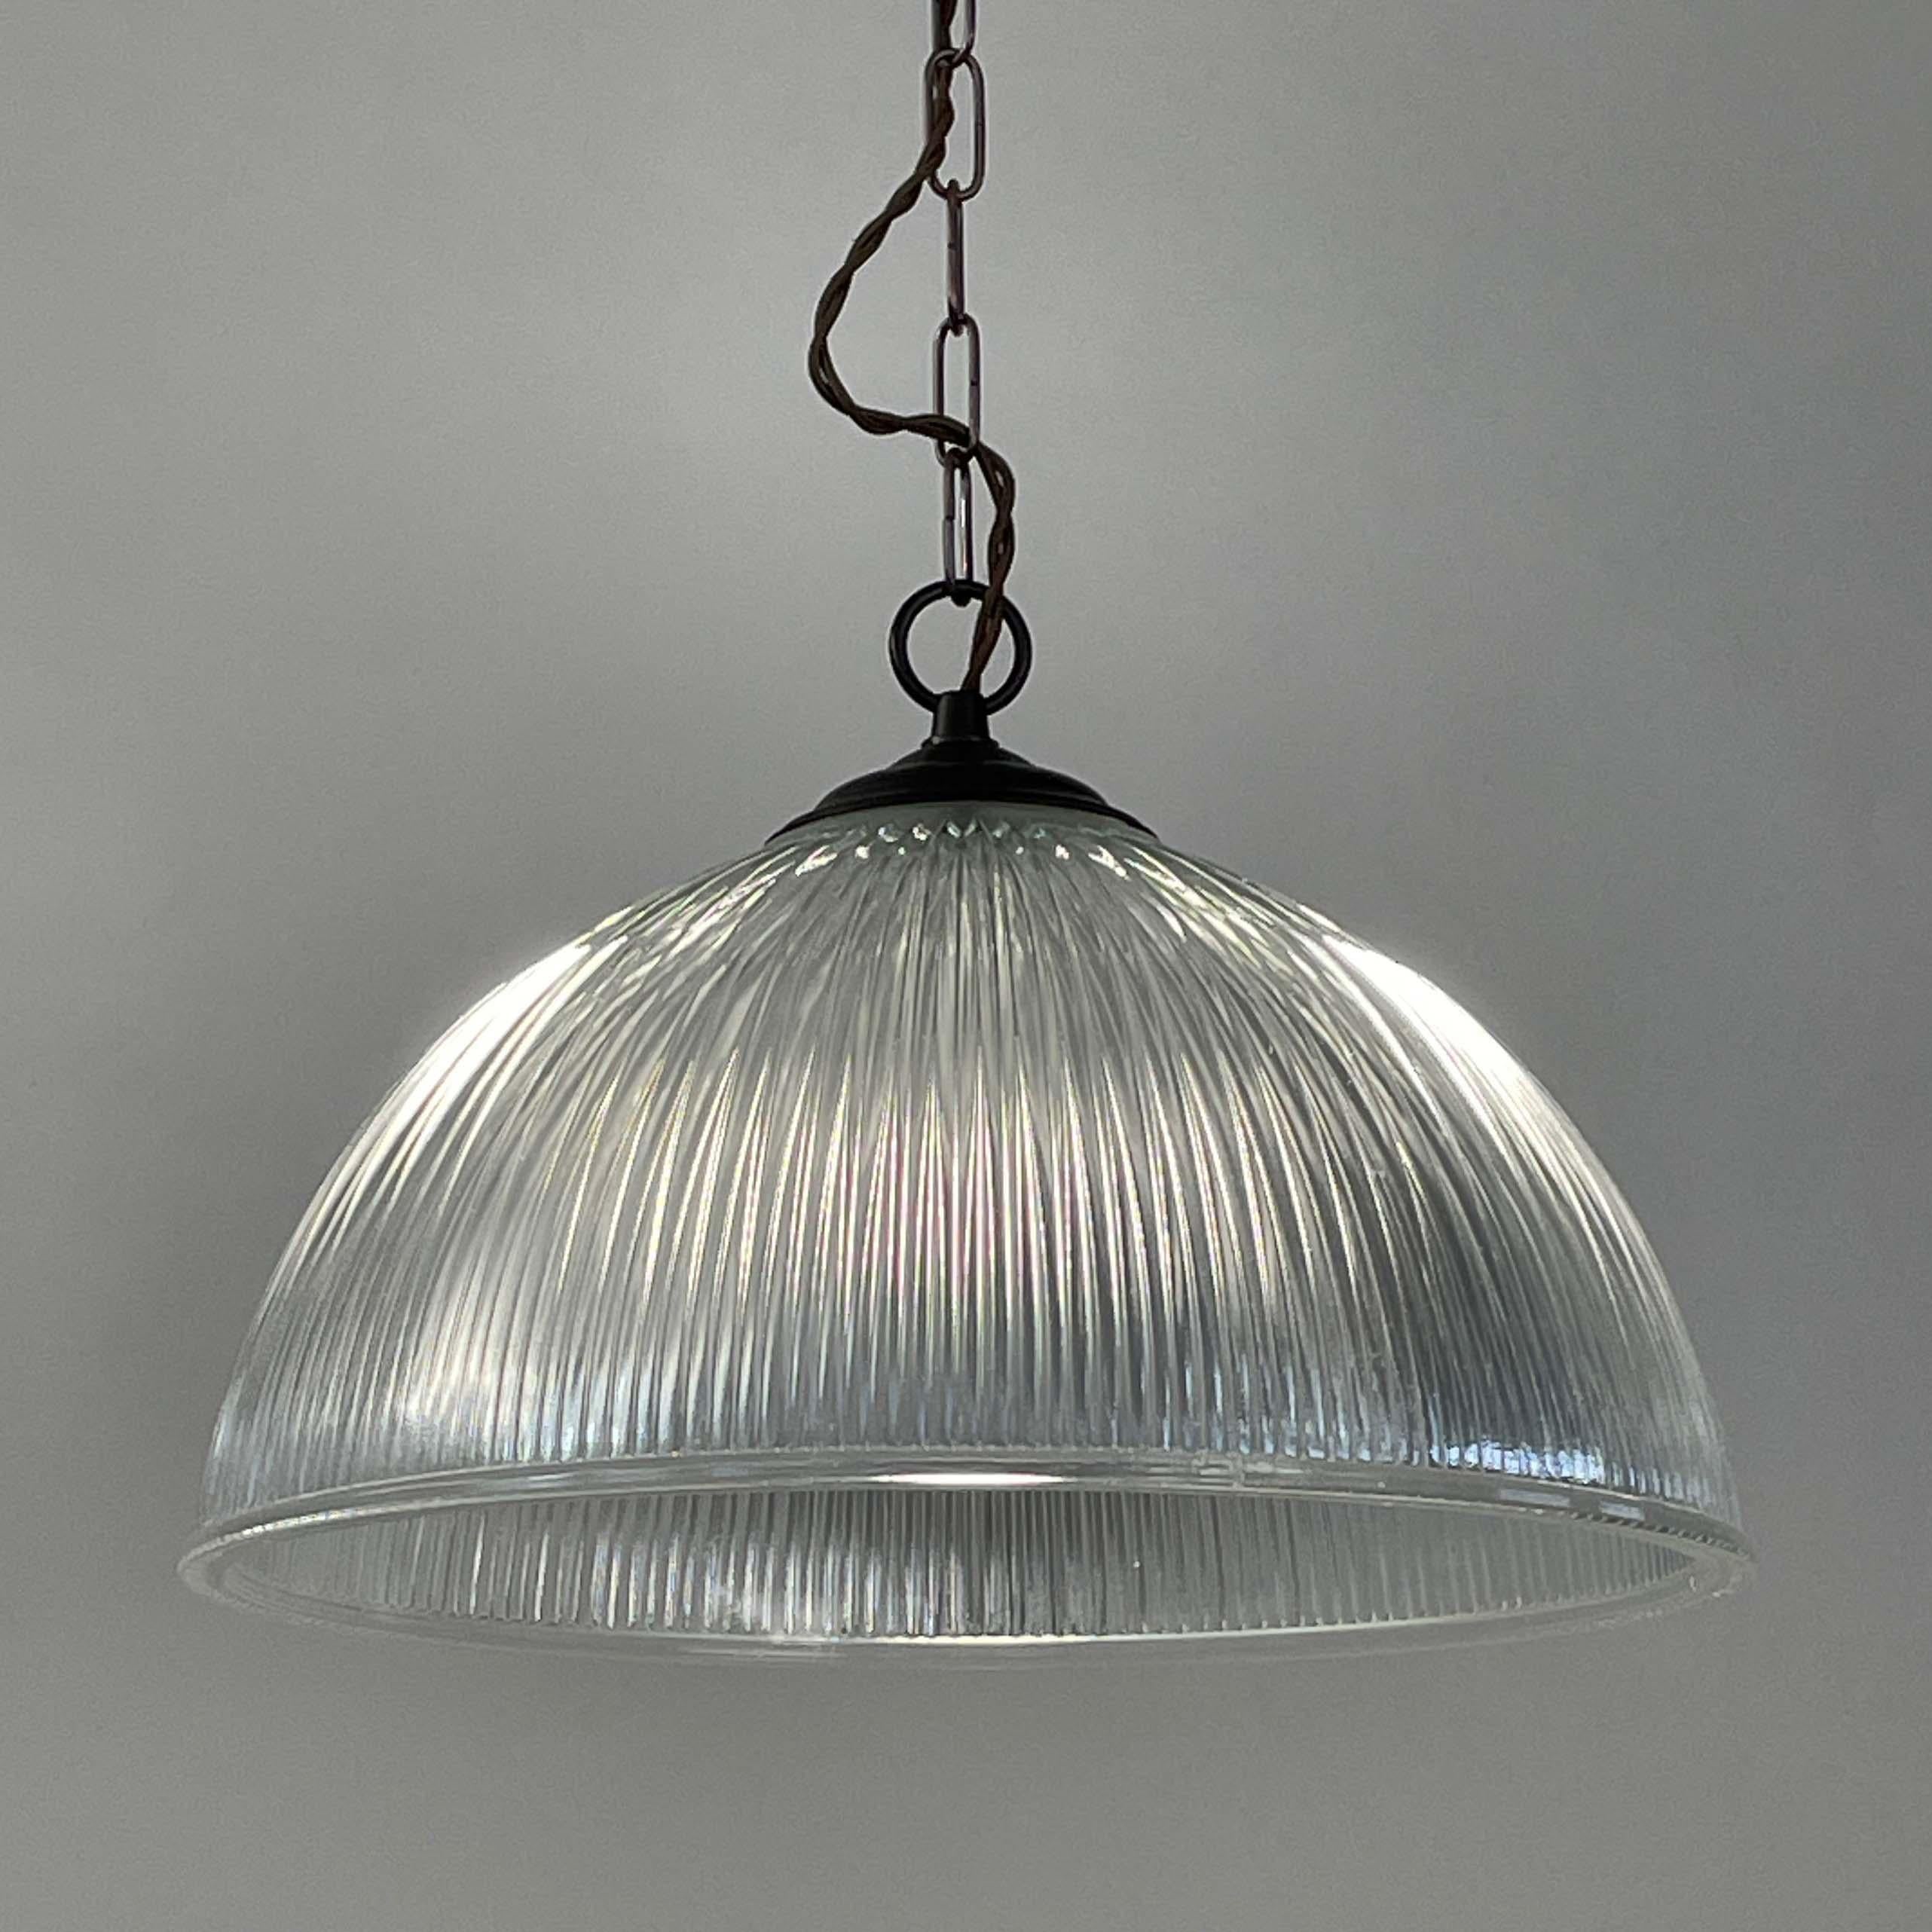 Art Deco Holophane Industrial Glass Pendant Lamp, France, 1930s For Sale 1